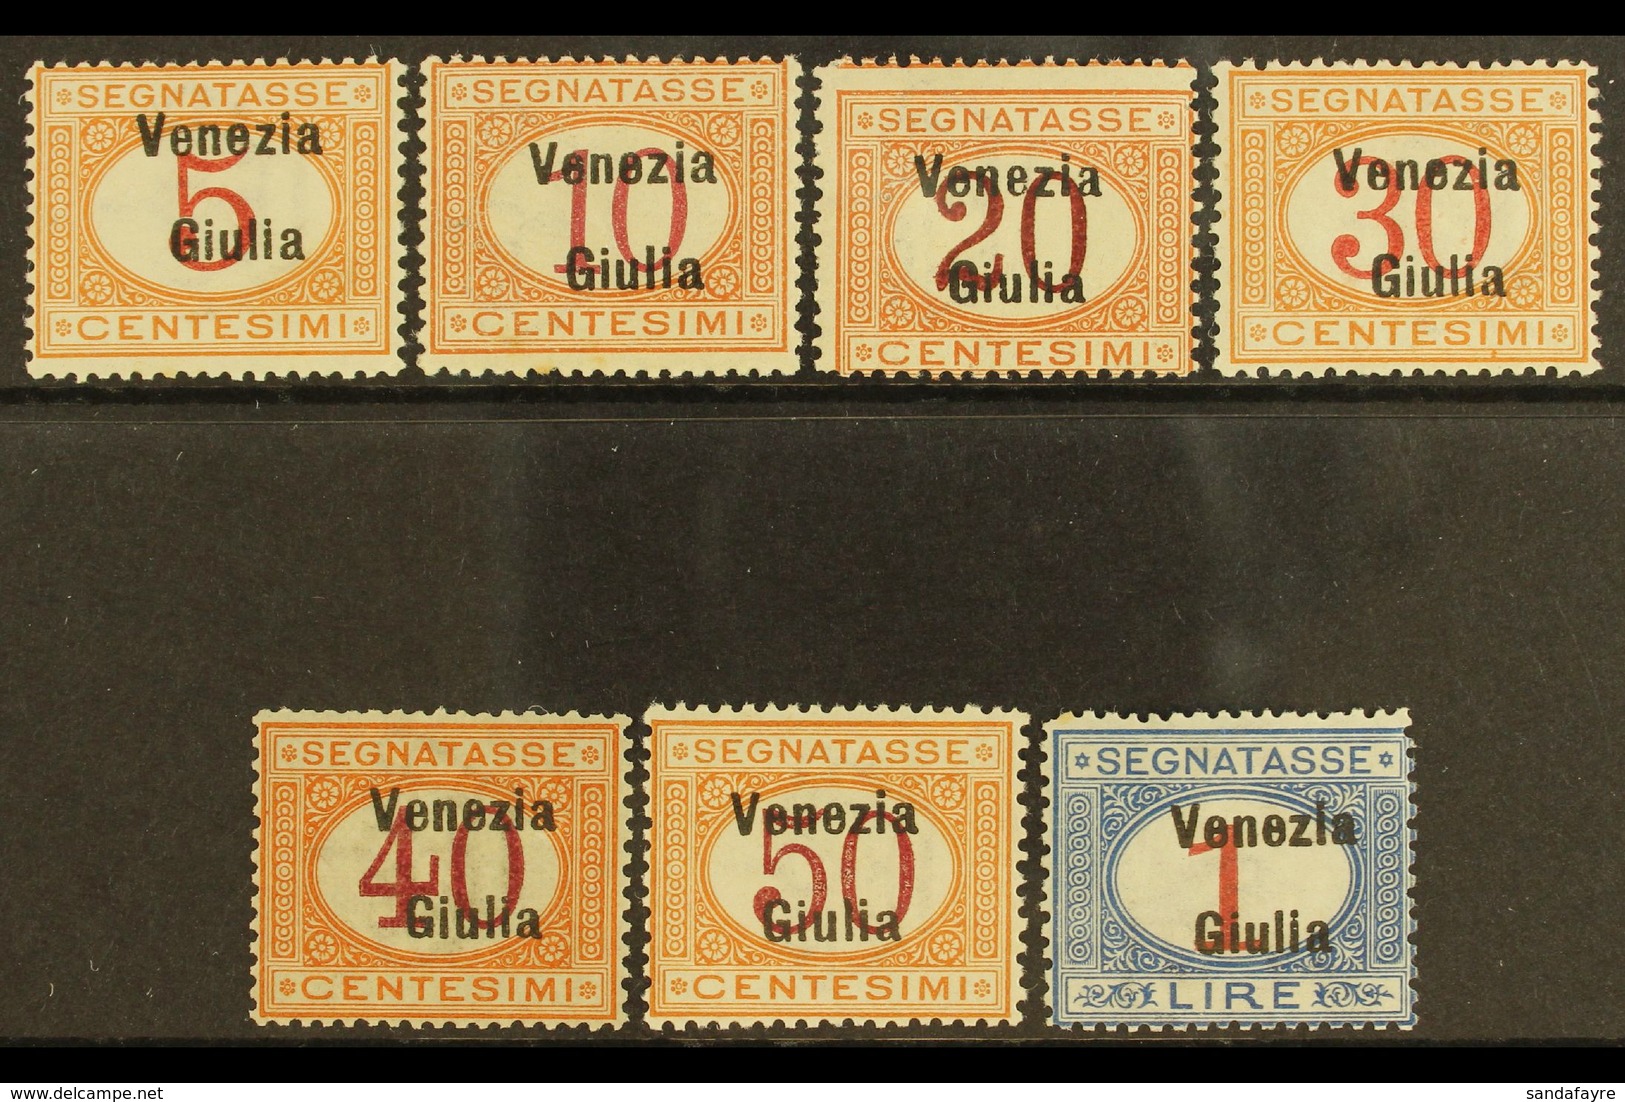 VENEZIA GIULIA  POSTAGE DUES 1918 Overprint Set Complete, Sass S4, Very Fine Mint. Cat €1000 (£760) Rare Set. (7 Stamps) - Ohne Zuordnung